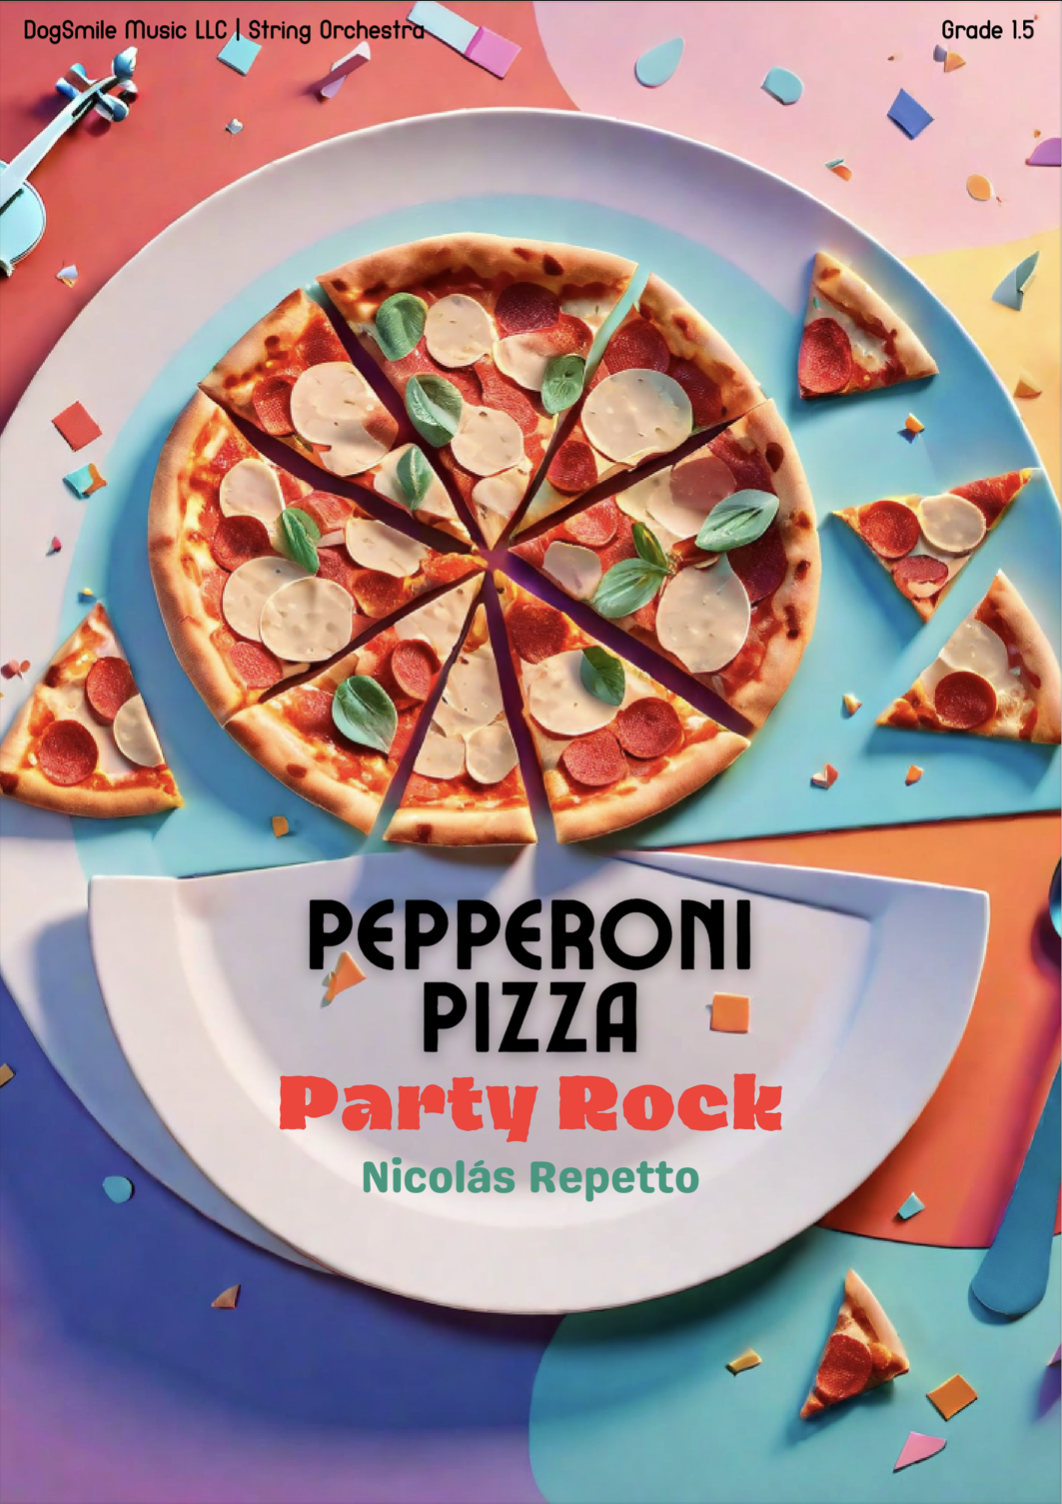 Pepperoni Pizza Party Rock by Nicolas Repetto